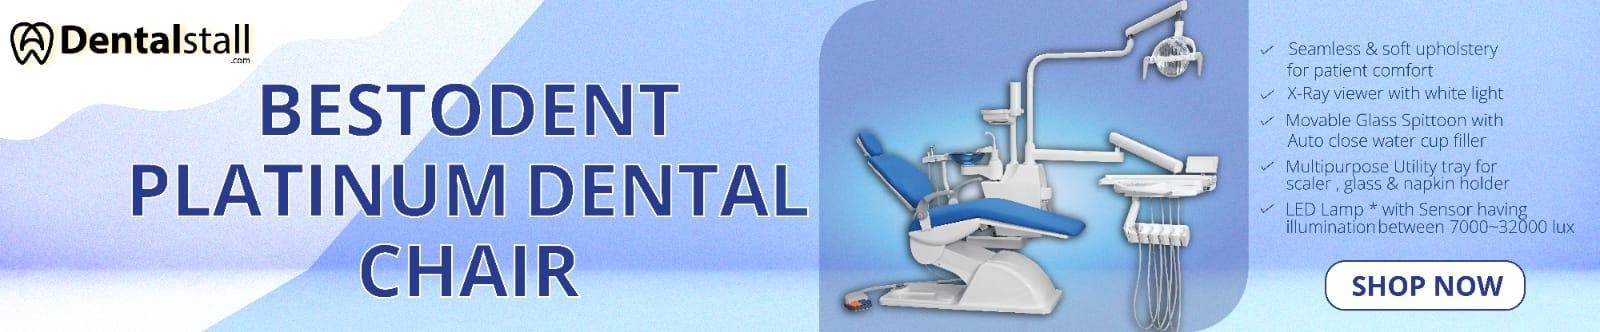 buy dental products online - Dentalstall dental store online USA